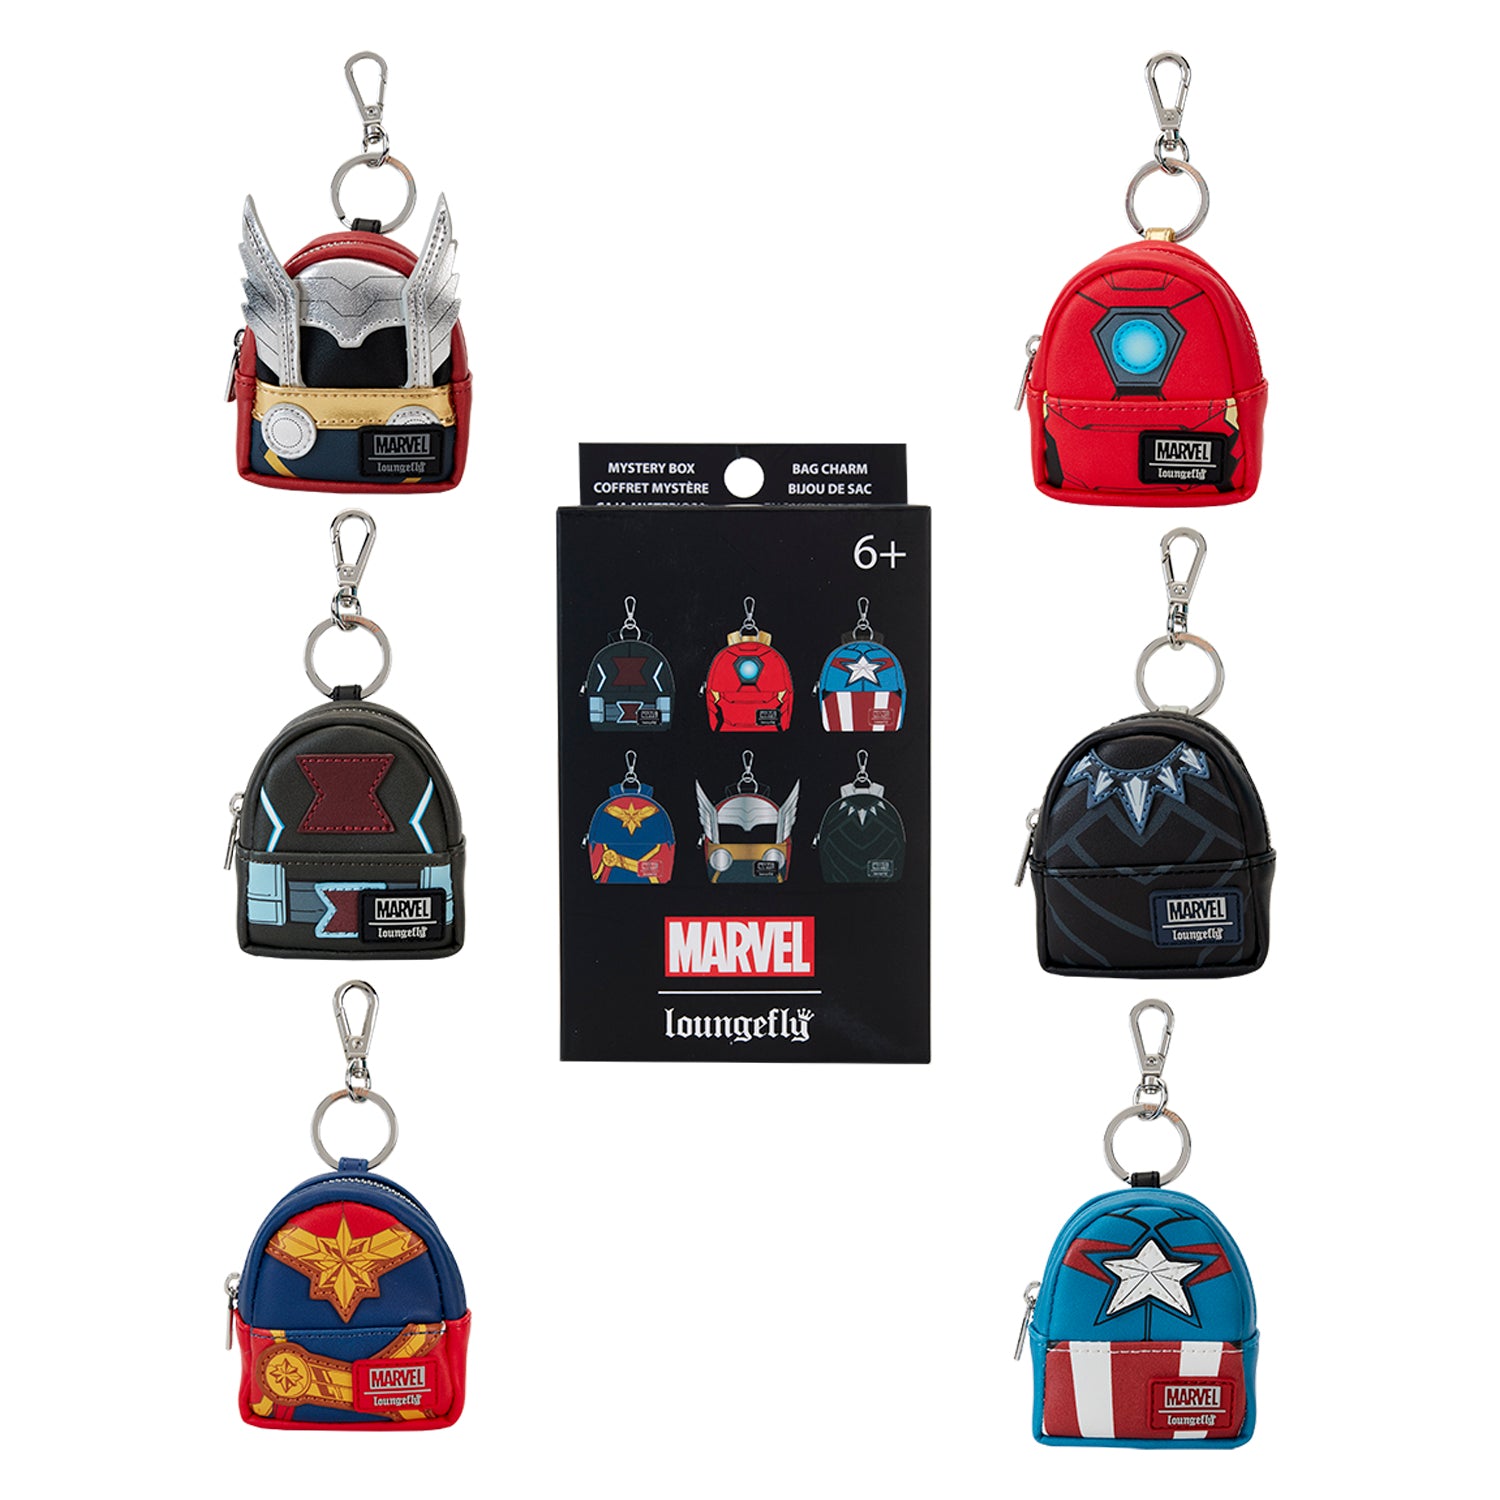 Loungefly Marvel Avengers Cosplay Mini Backpack Blind Box Keychains